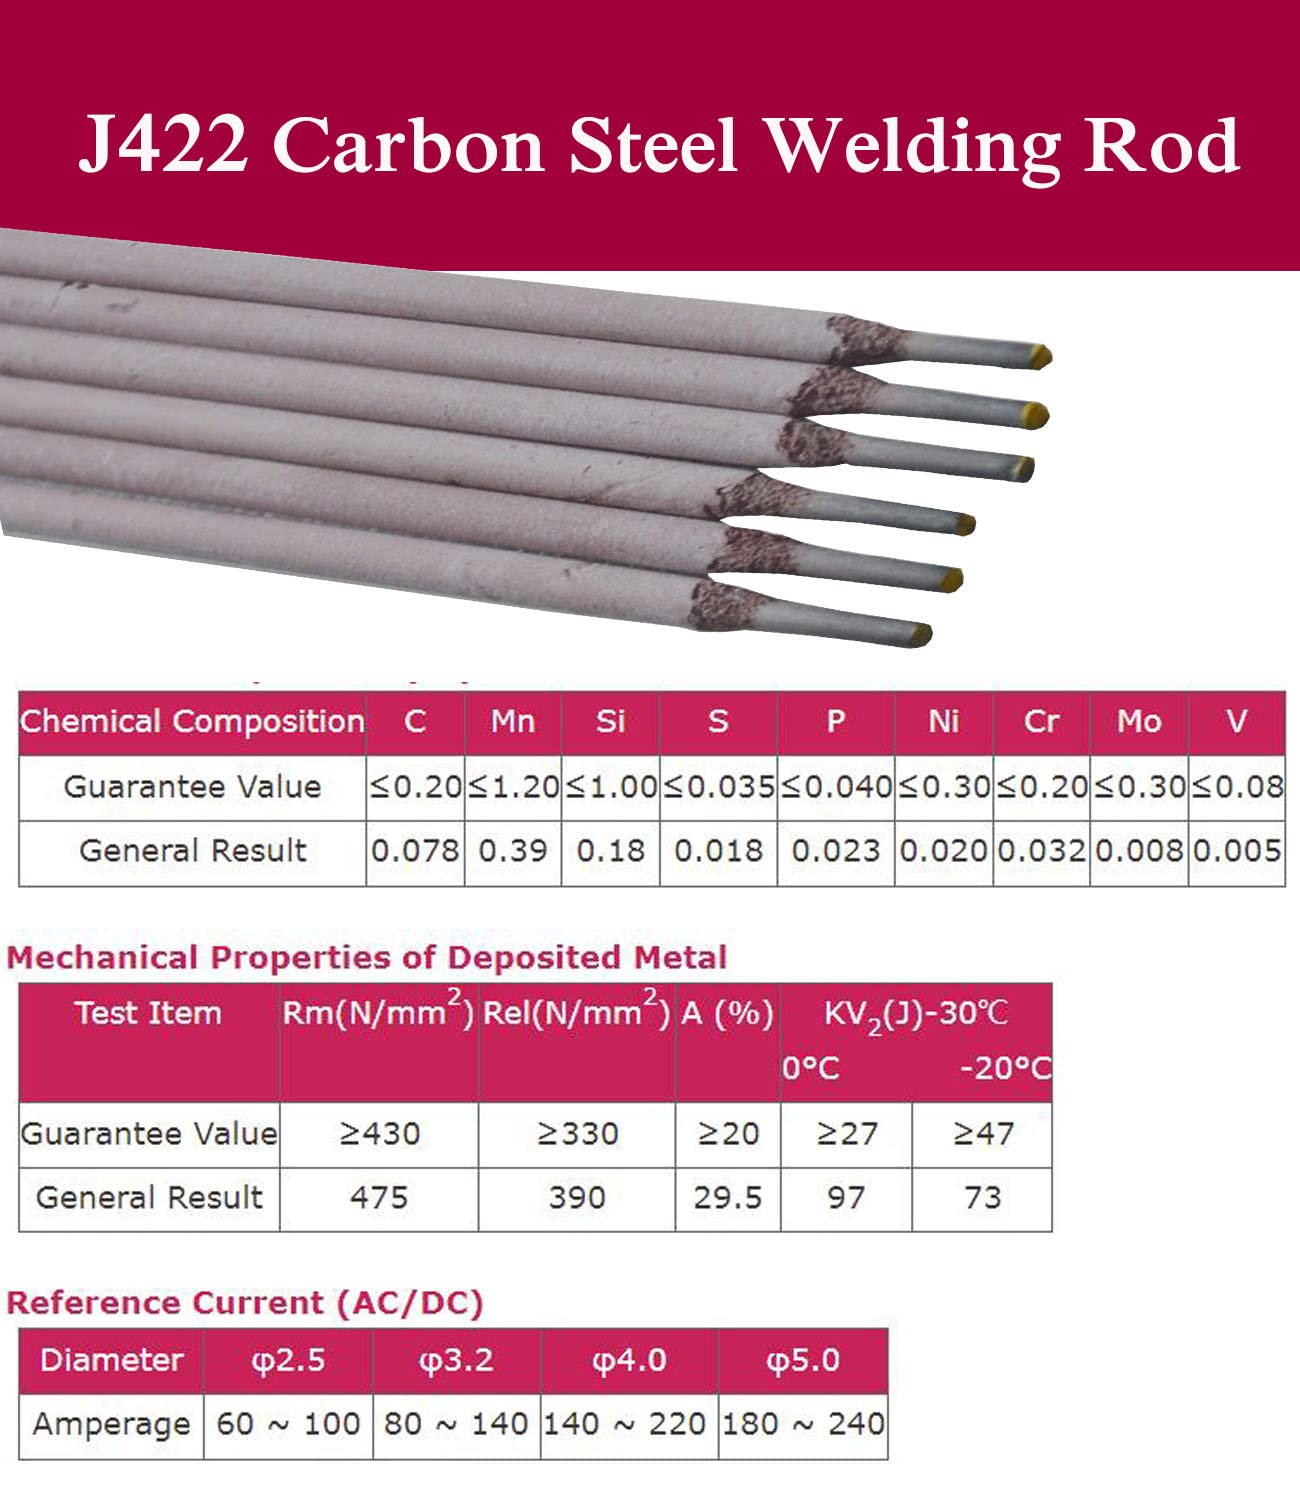 E4303 Welding Rods 1/8"x14",15 Sticks Arc Welding Iron Electrodes, J422 Carbon Steel Welding Mild Steel for Industry/Household Repairs 1LB